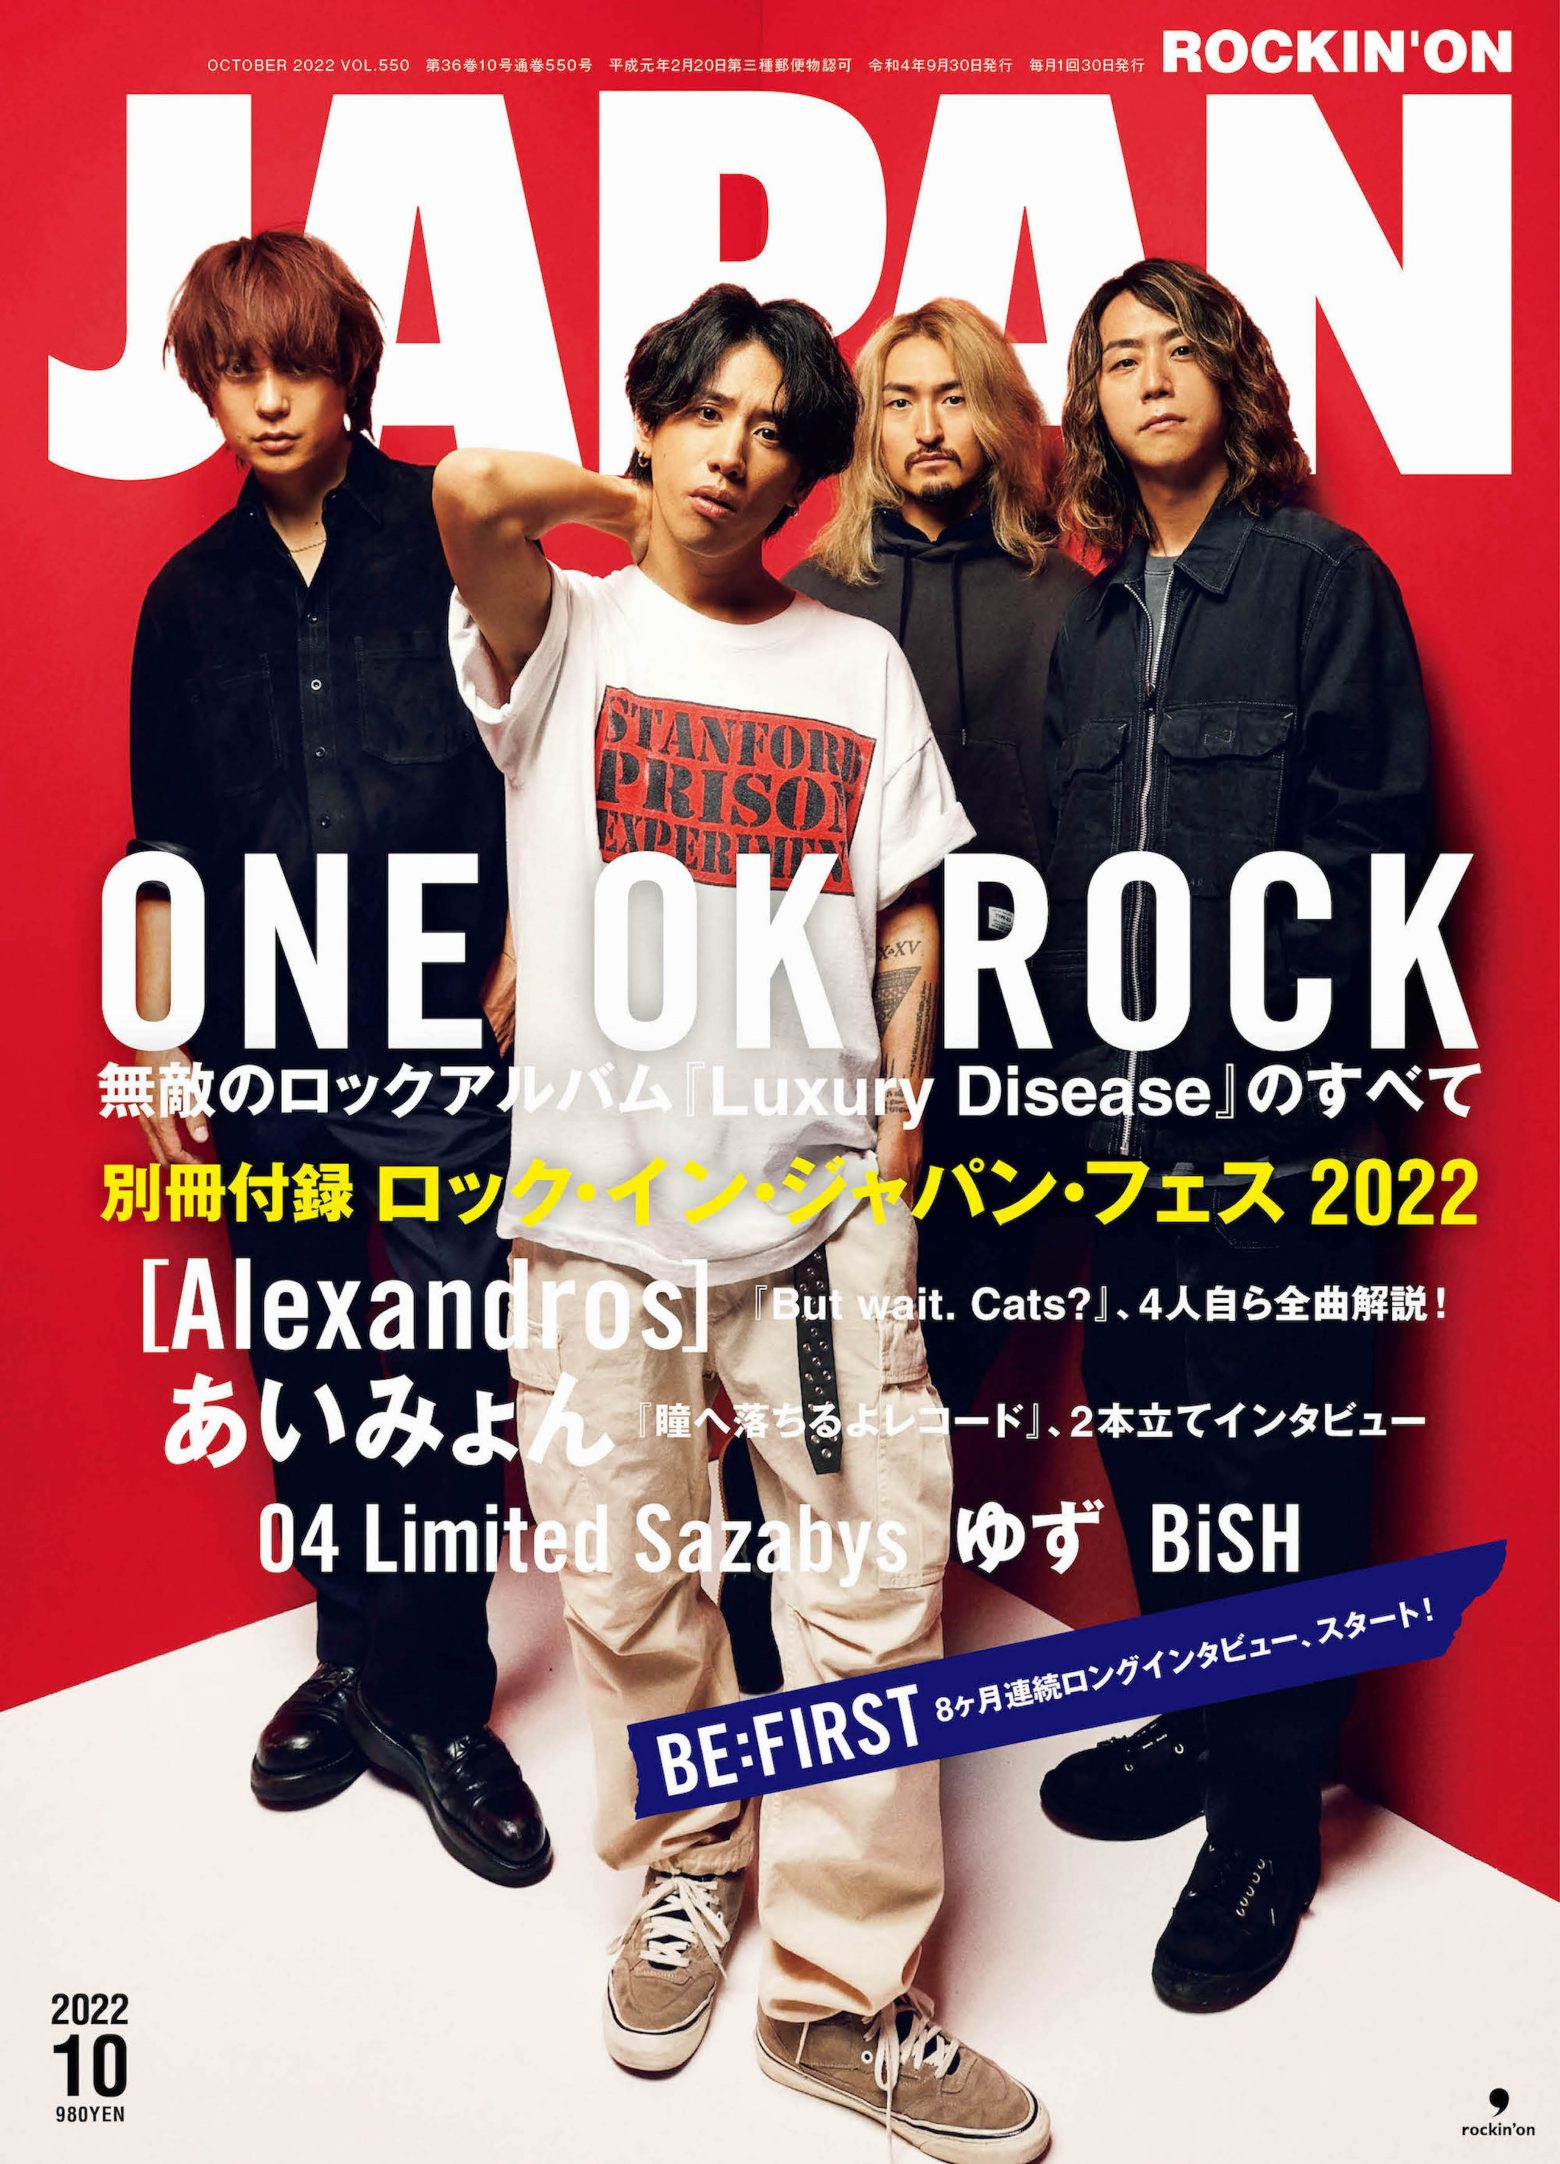 ONE OK ROCK、『ROCKIN'ON JAPAN』10月号の表紙巻頭に登場 | Musicman